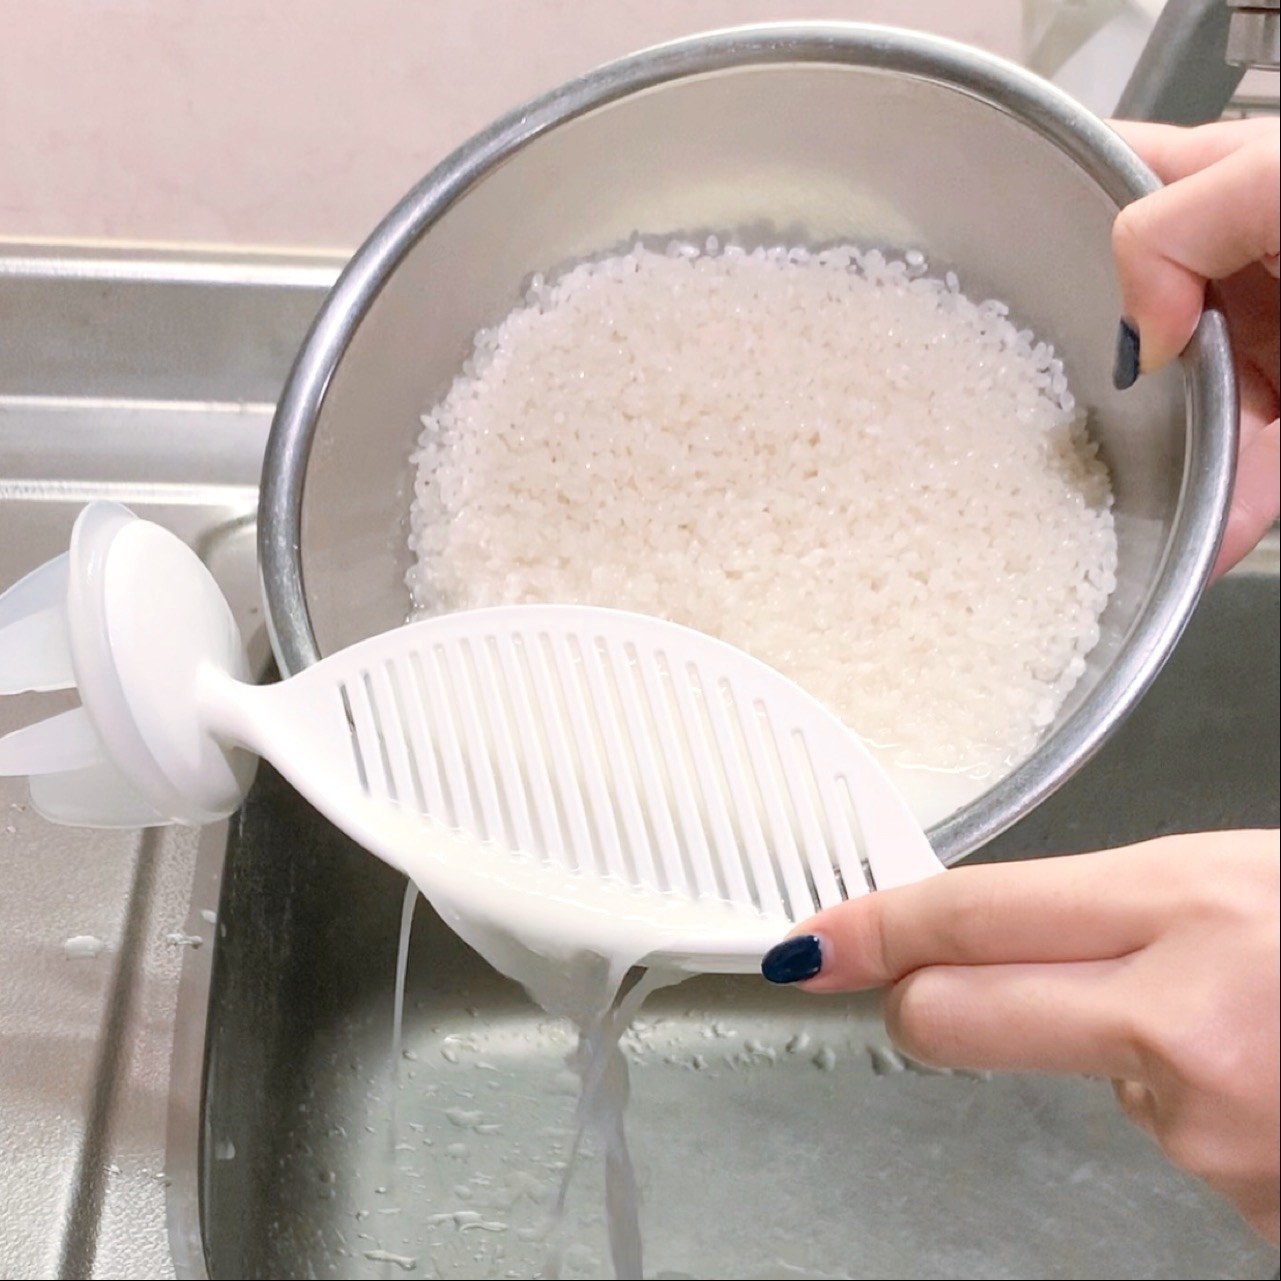 DAISO（ダイソー）のおすすめアイデア調理グッズ「なるほど米とぎ」便利で大人気